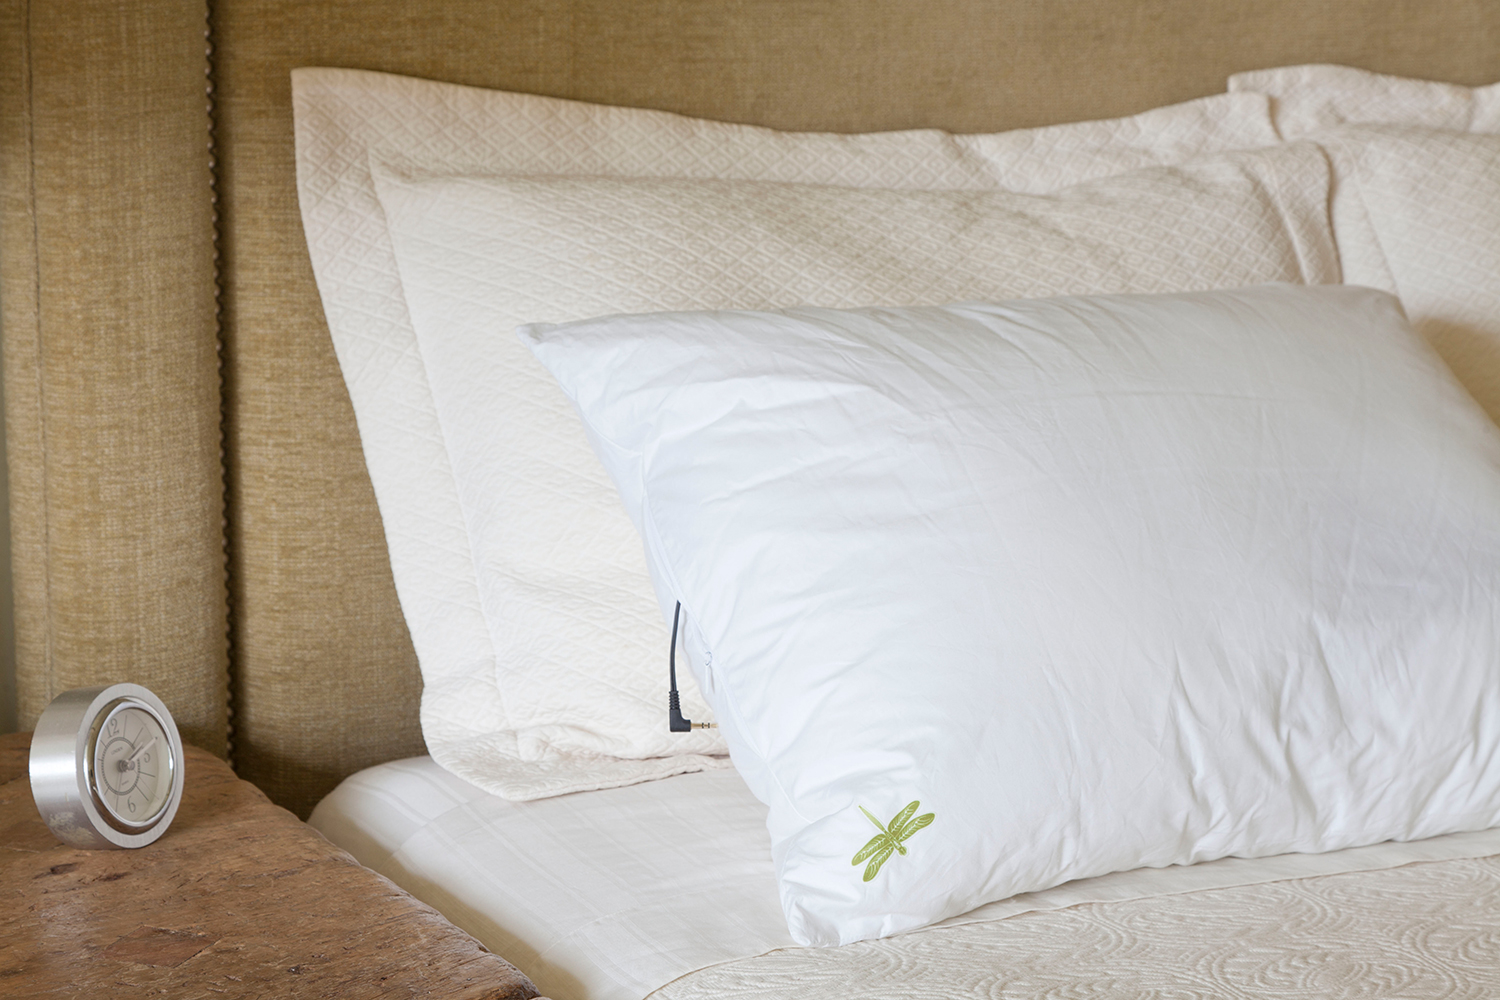 Dreampad pillow